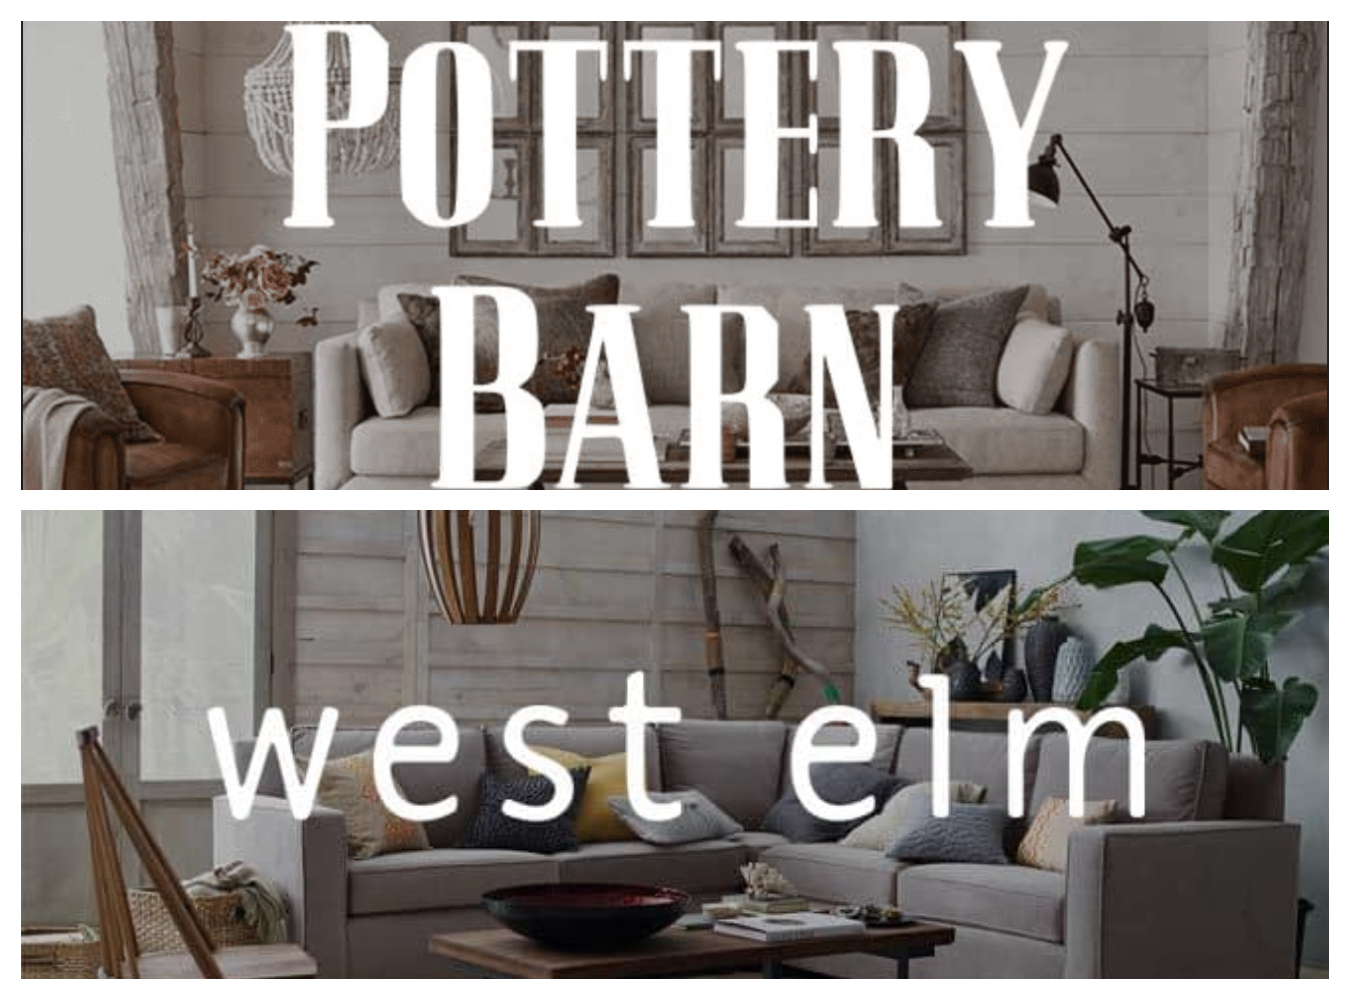 west elm vs pottery barn sofa, west elm vs pottery barn quality, west elm vs pottery barn furniture, west elm vs crate and barrel vs pottery barn